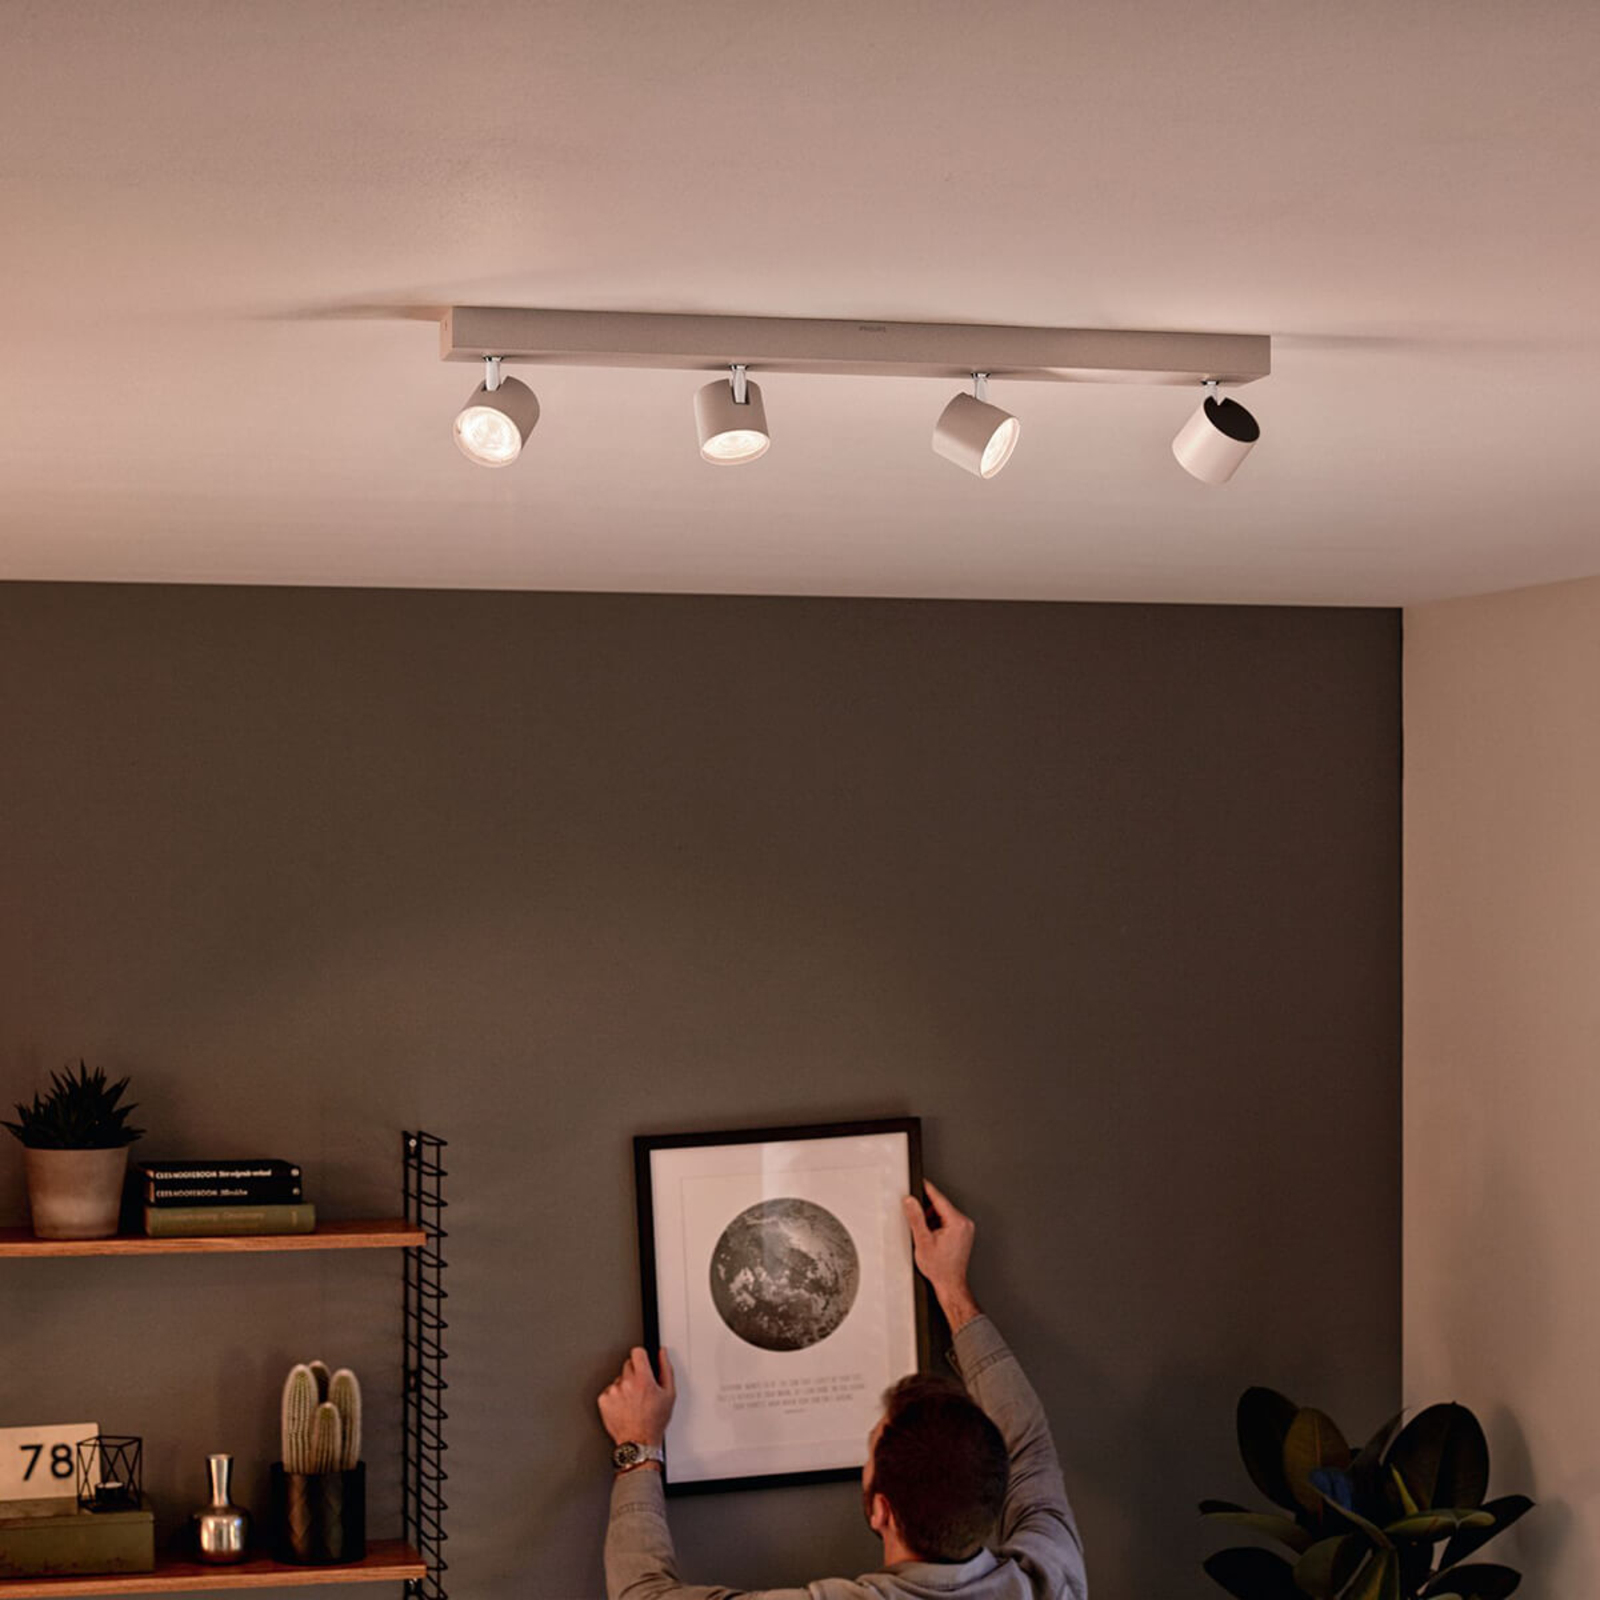 Star four-bulb LED ceiling spot, white, WarmGlow